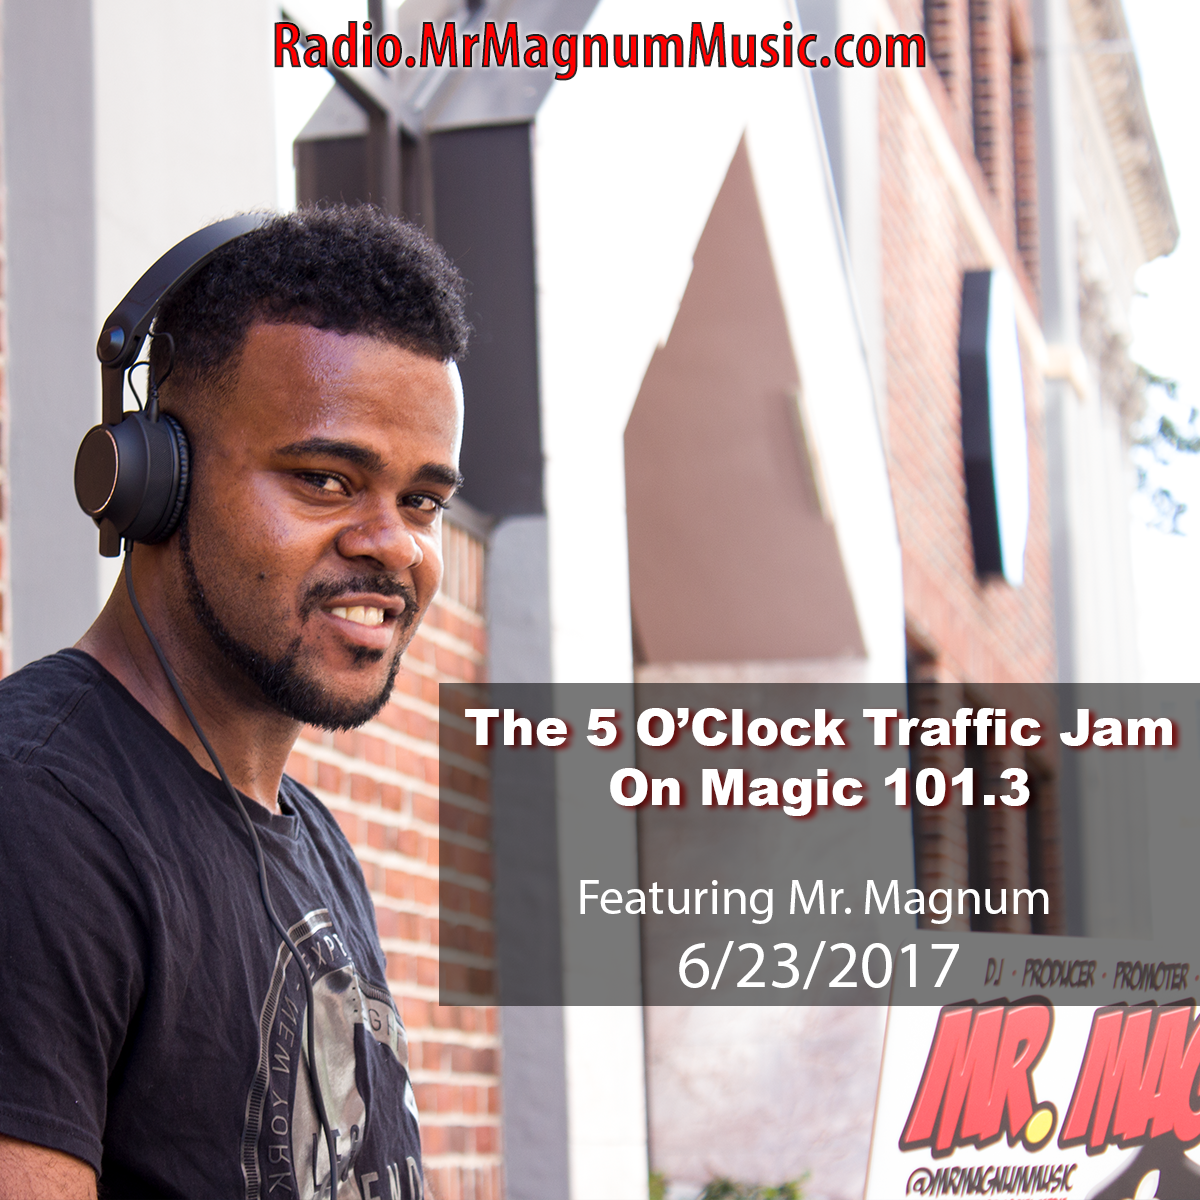 The 5 O'Clock Traffic Jam 20170623 featuring Gainesville's #1 DJ, Mr. Magnum on Magic 101.3